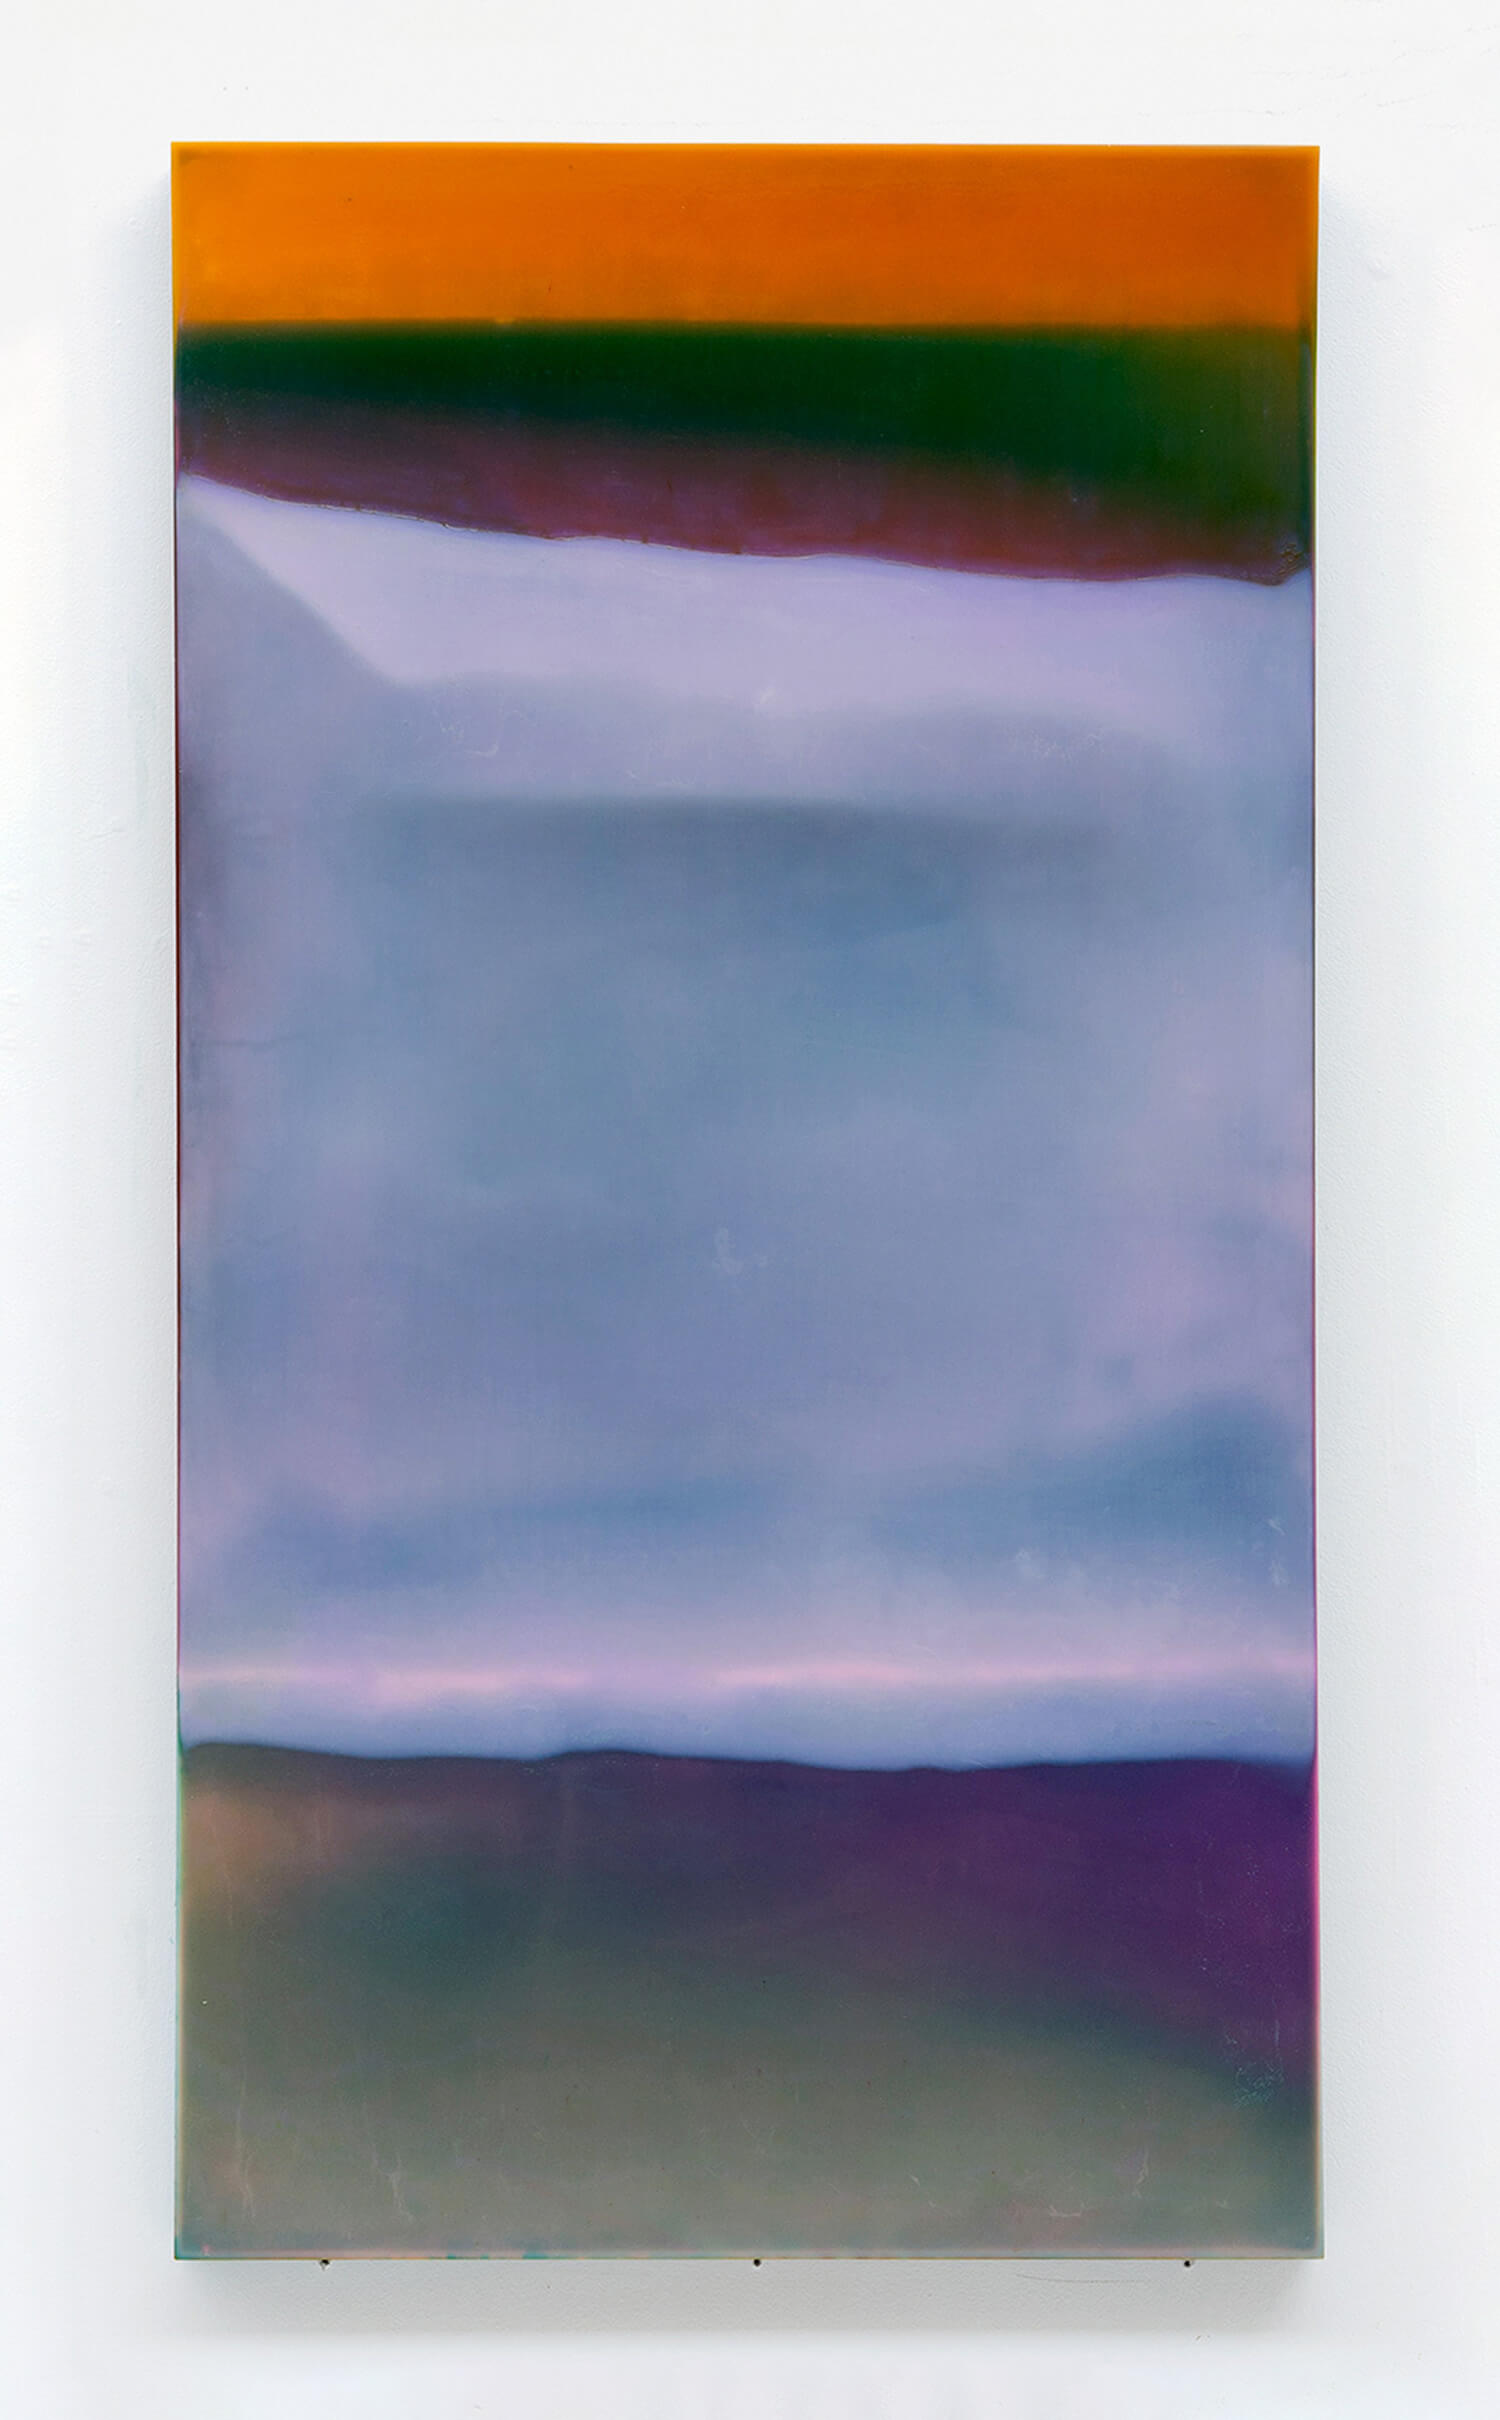 Pigmente, Epoxydharz, Holzchassis<br />
122 × 66 × 4.5 cm